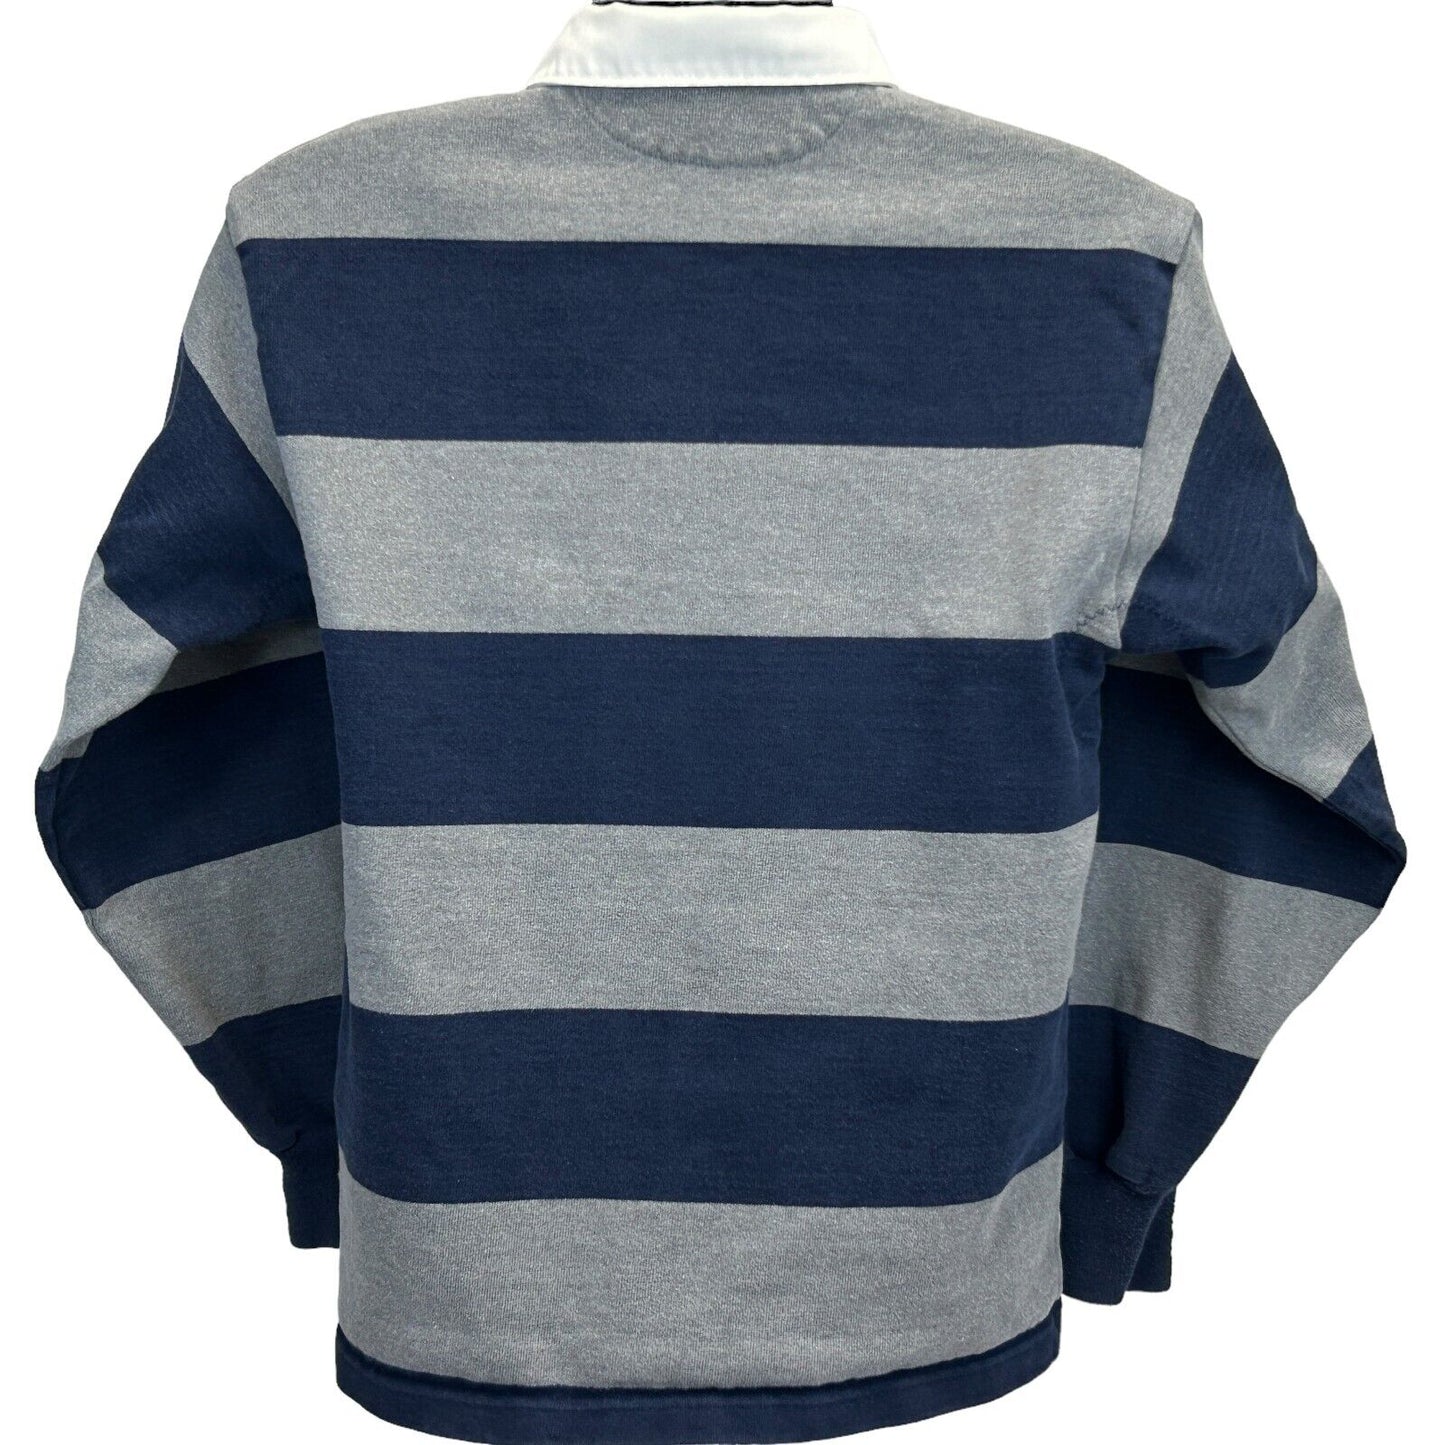 Georgetown University Hoyas Vintage Y2Ks Rugby Polo Shirt Small NCAA Mens Gray